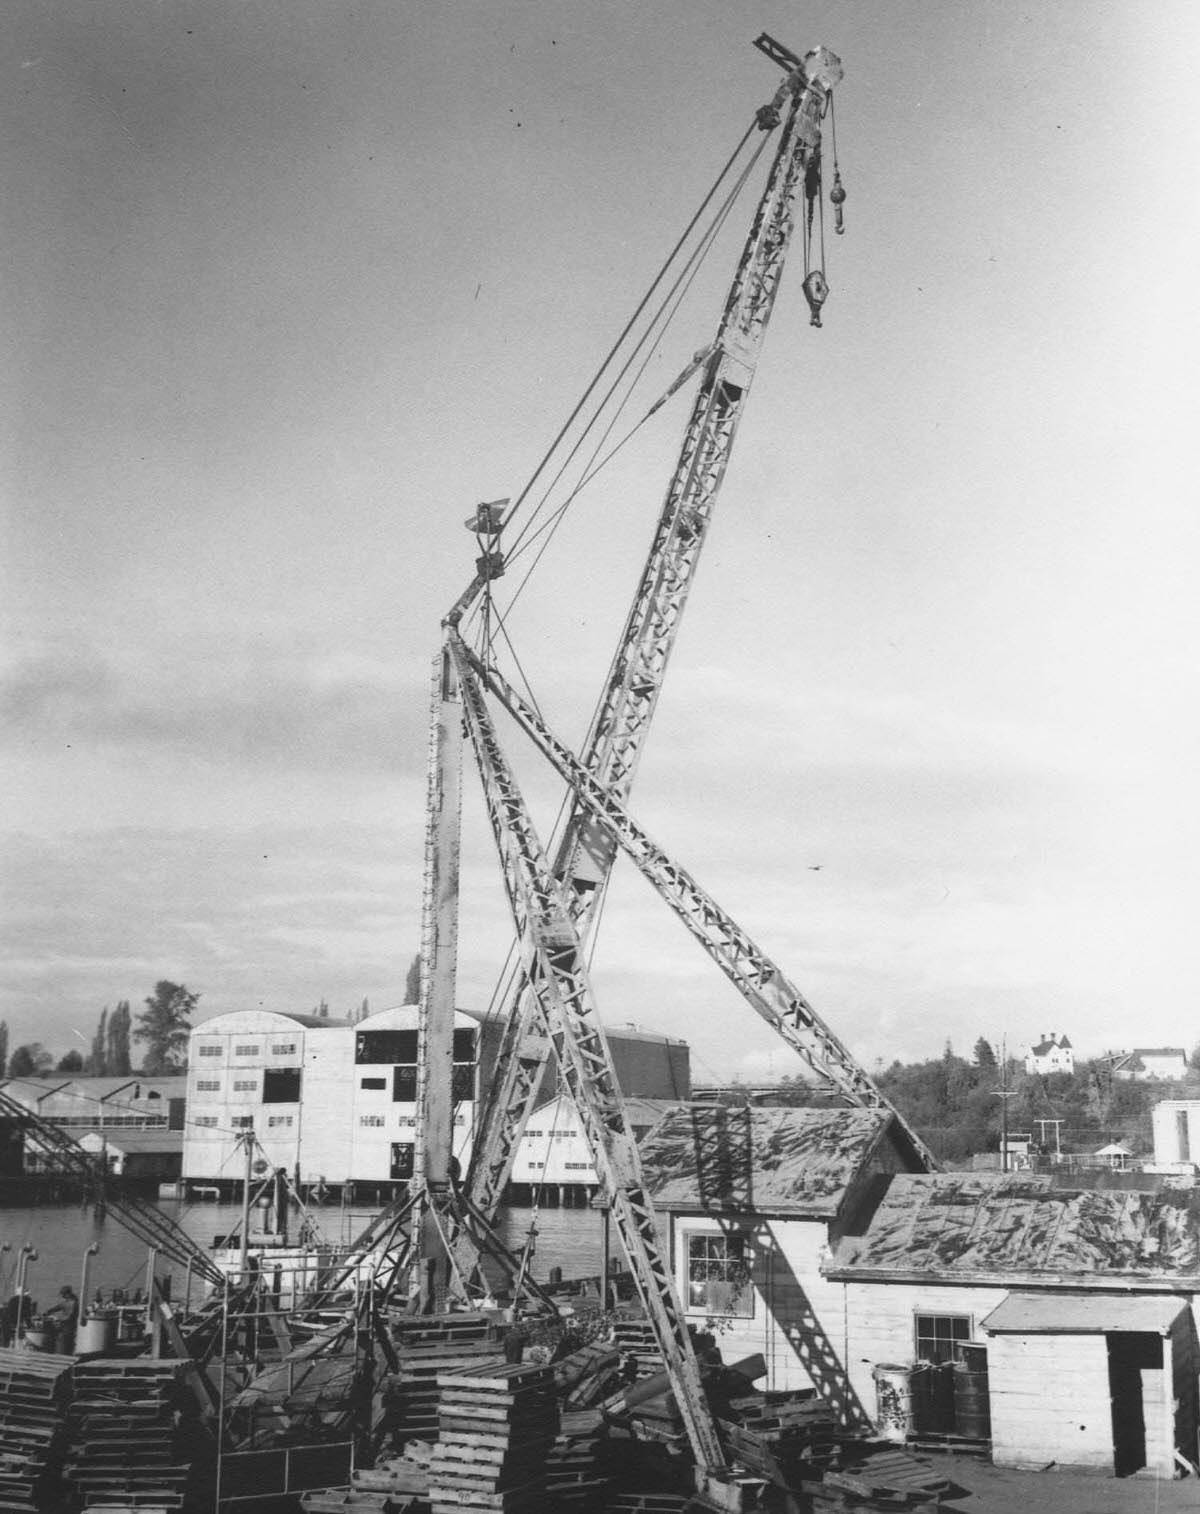 Crane on Dock, 1967